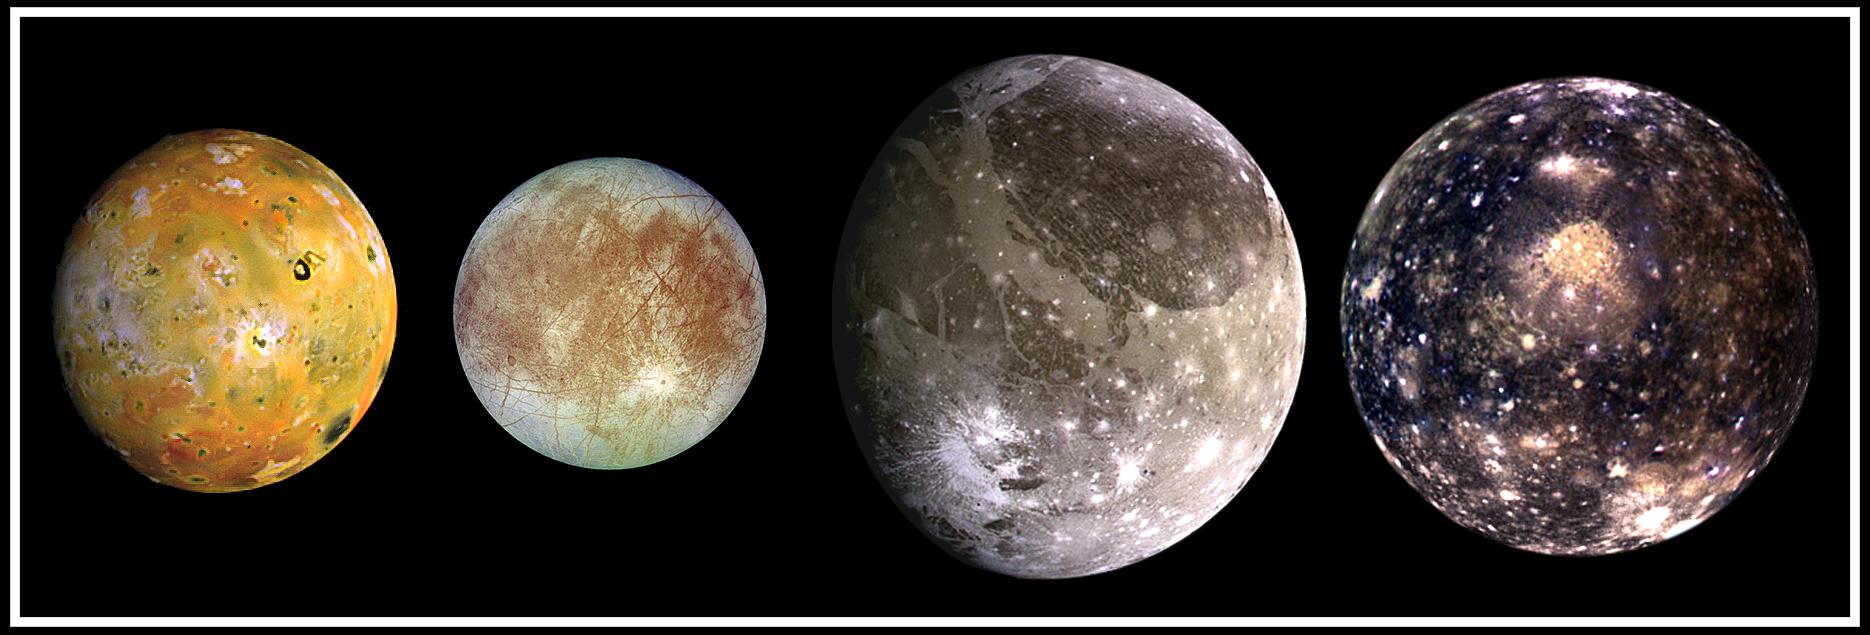 <span style='font-size:16px;position:relative;top:-50px'>木星の4大衛星(ガリレオ衛星: Io, Europa, Ganymede, and Callisto)のイメージ ([Image Credit:NASA/JPL/DLR]('https://photojournal.jpl.nasa.gov/catalog/PIA01299'))</span>